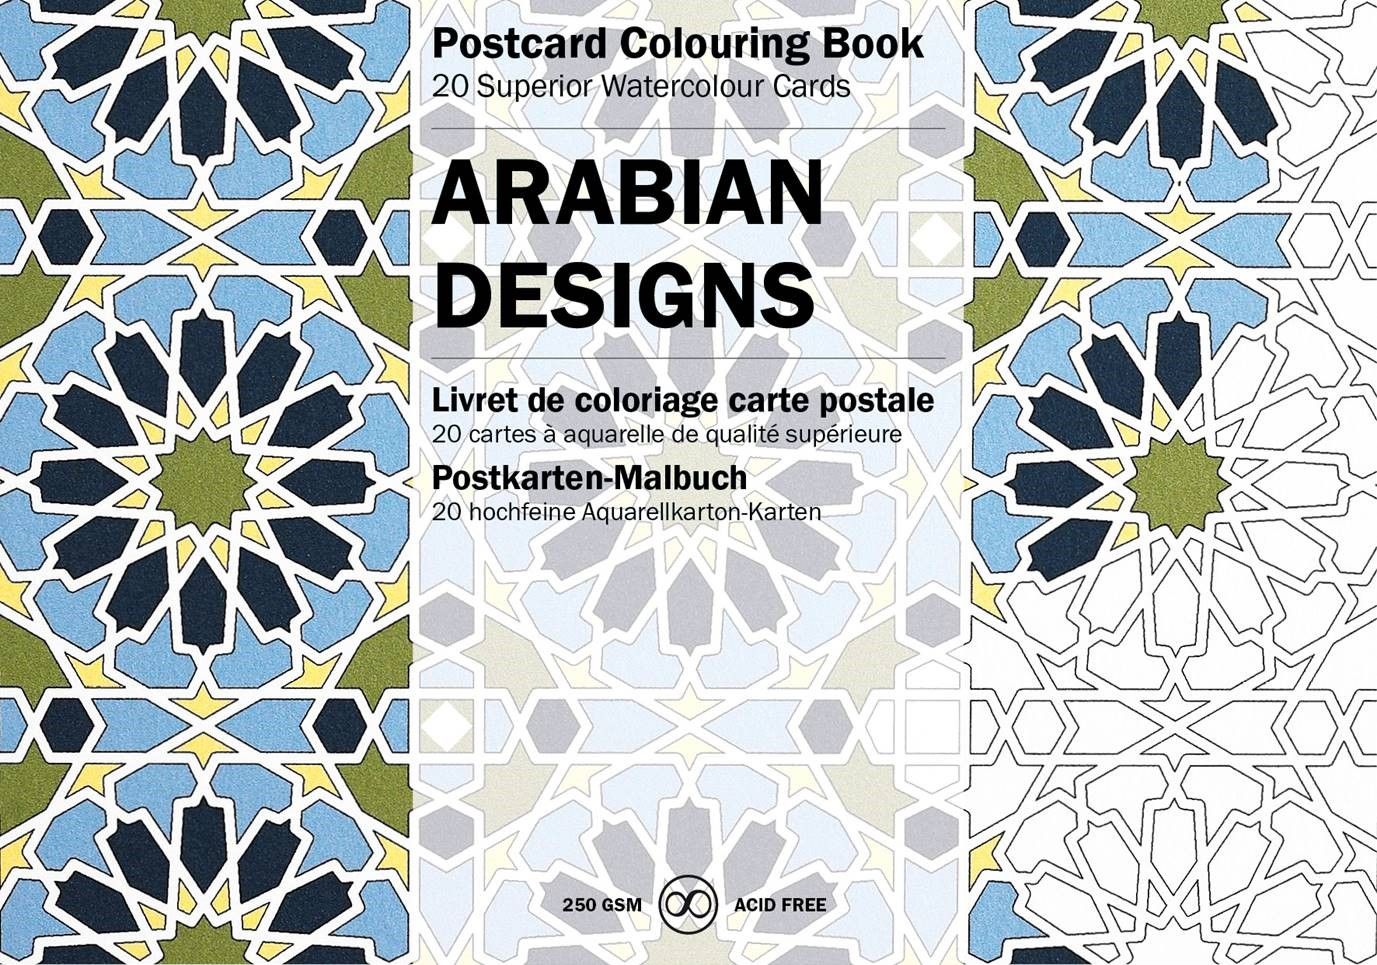 ARABIAN DESIGNS: PEPIN POSTCARD COLOURING BOOK